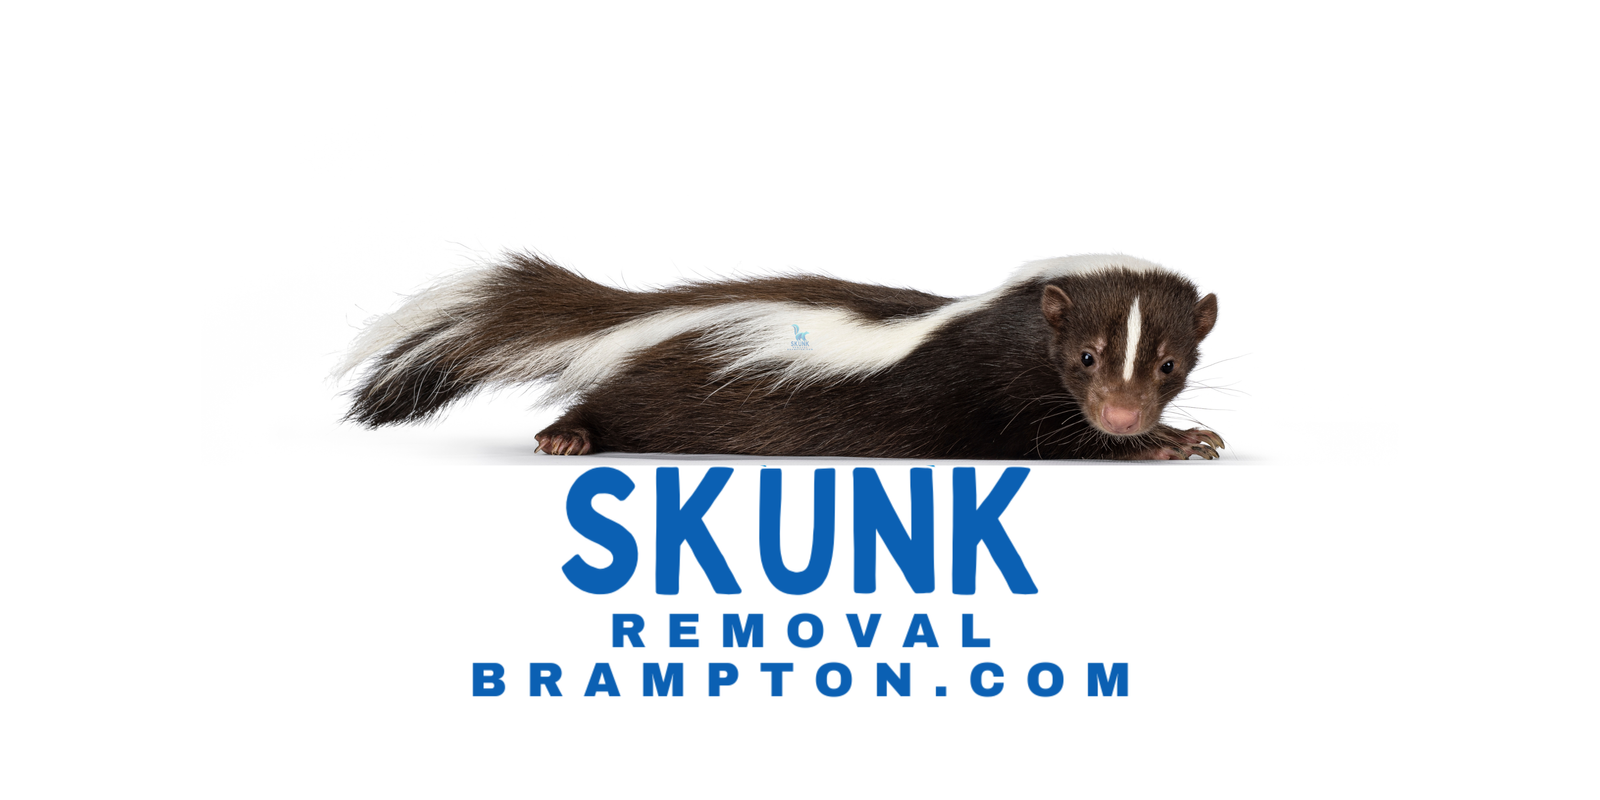 Best Skunk Control Tips For Brampton Homeowners